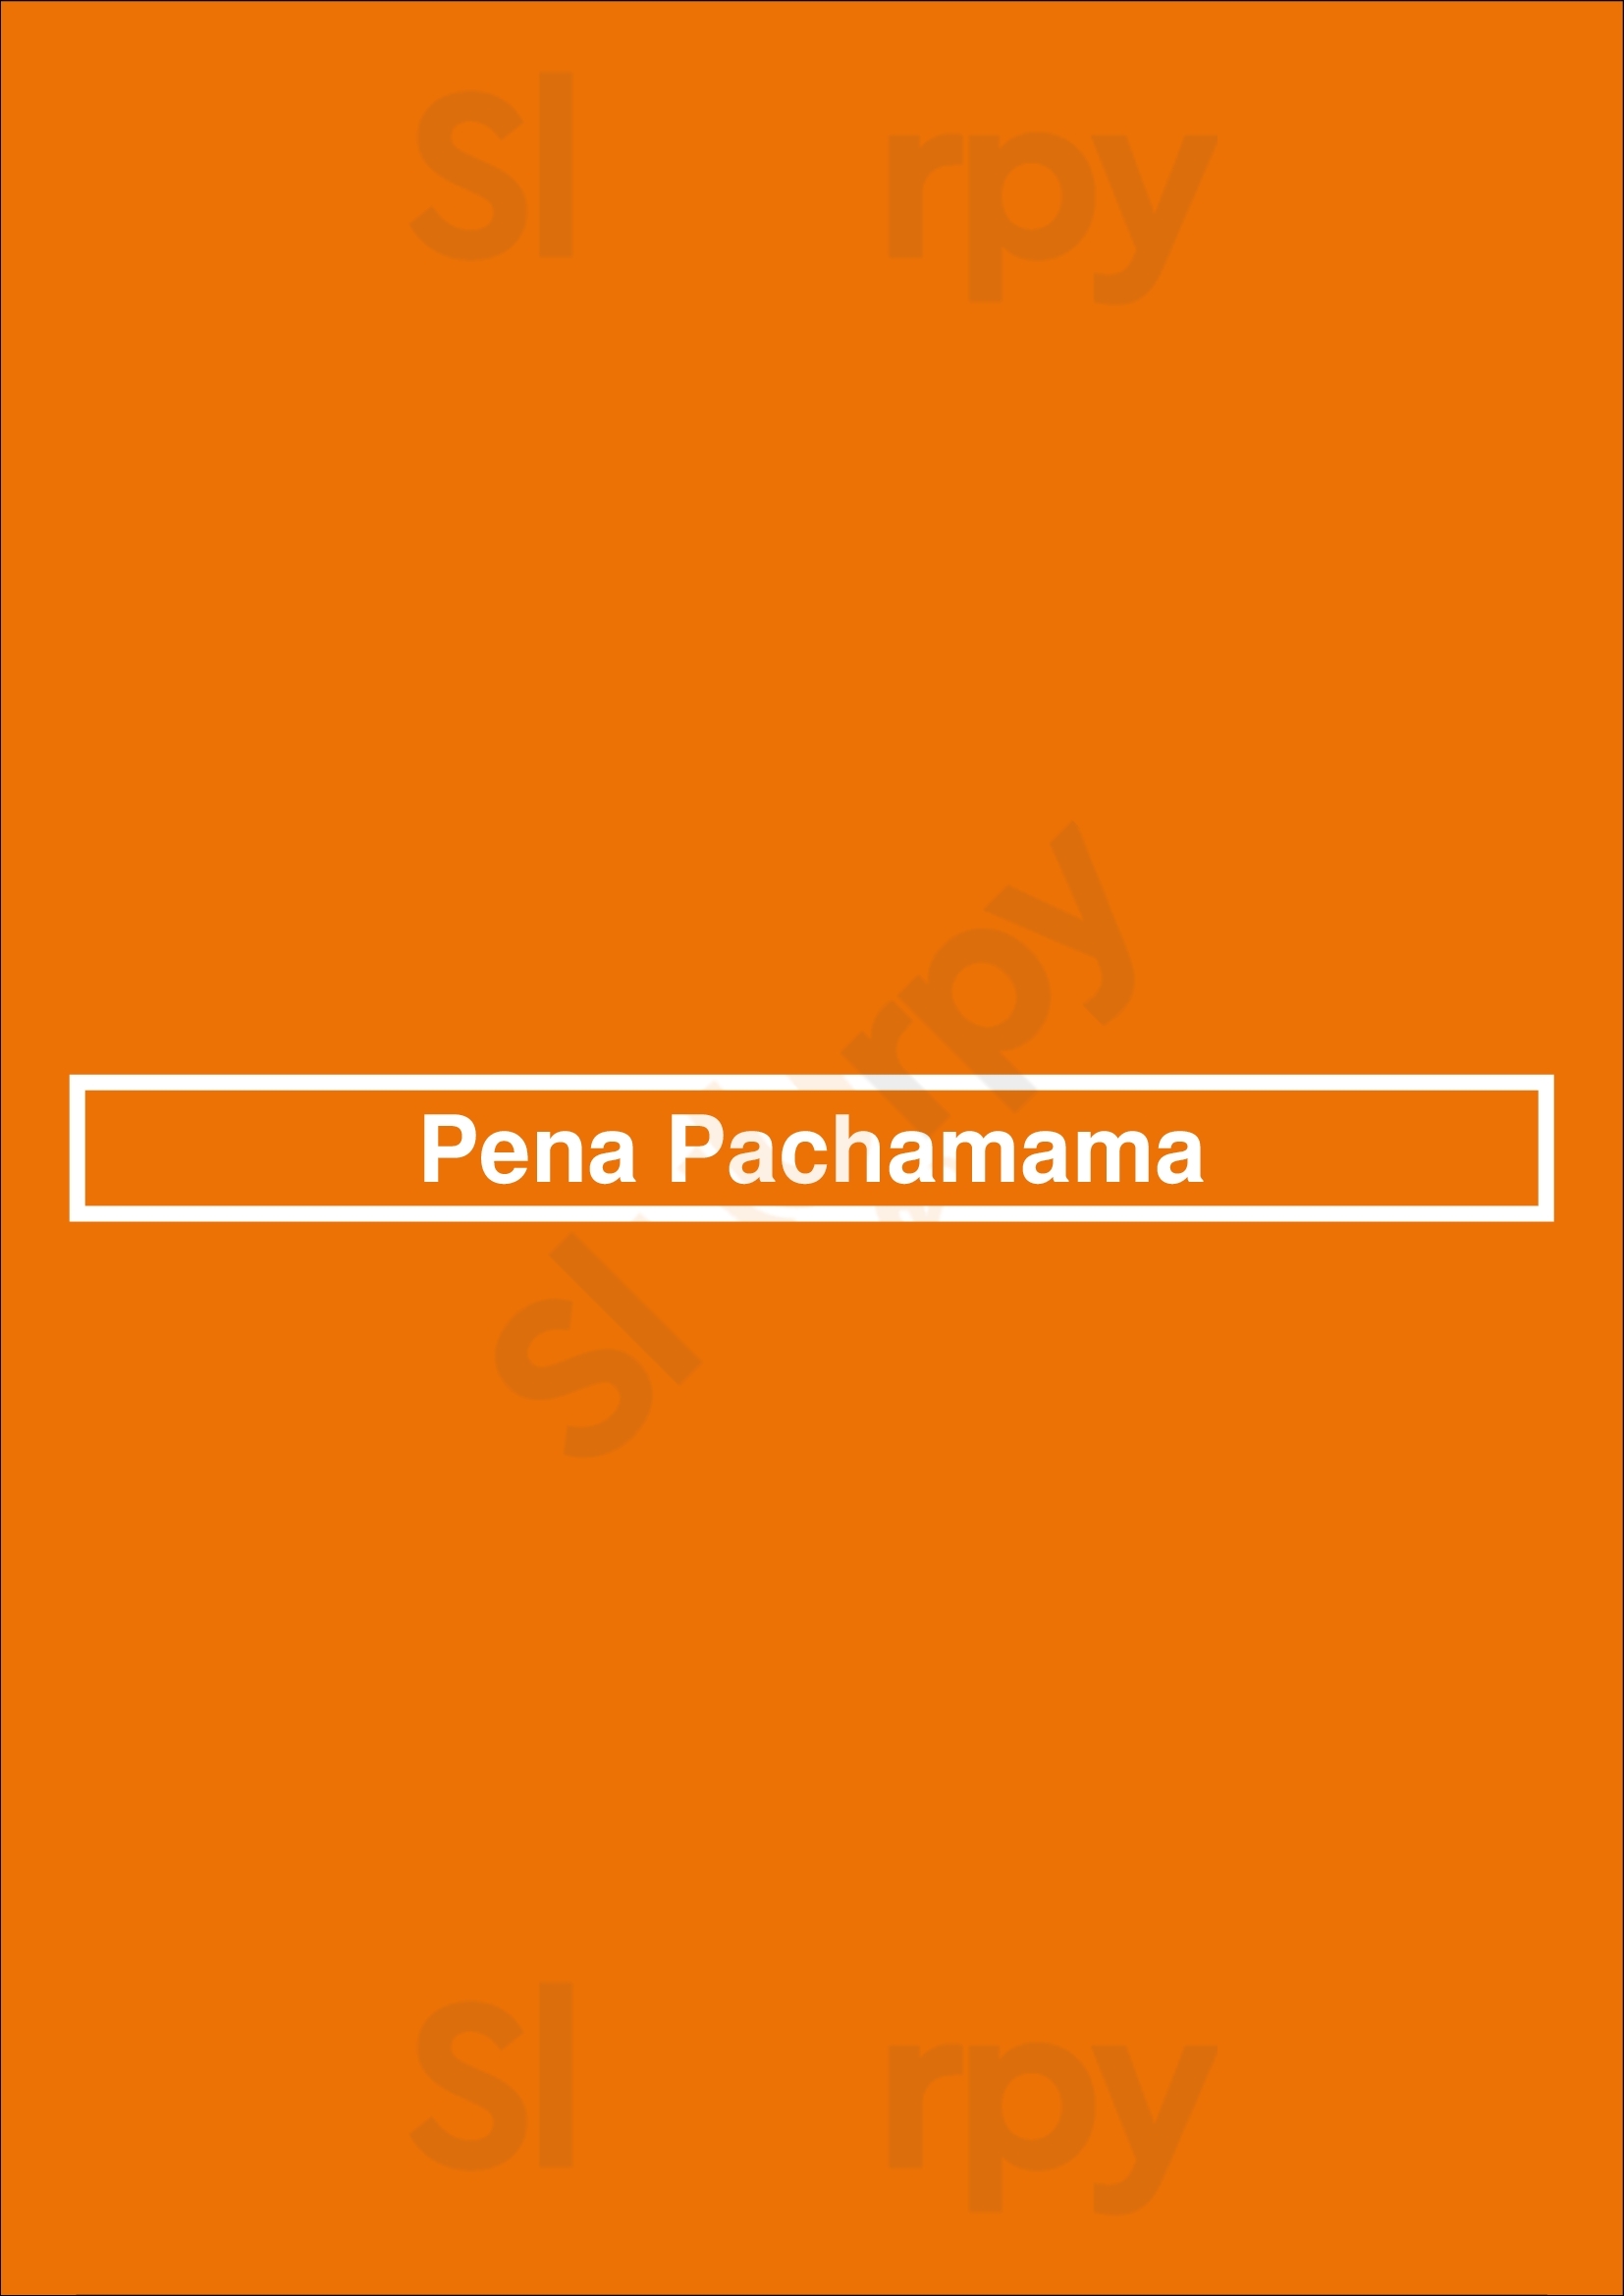 Pena Pachamama San Francisco Menu - 1